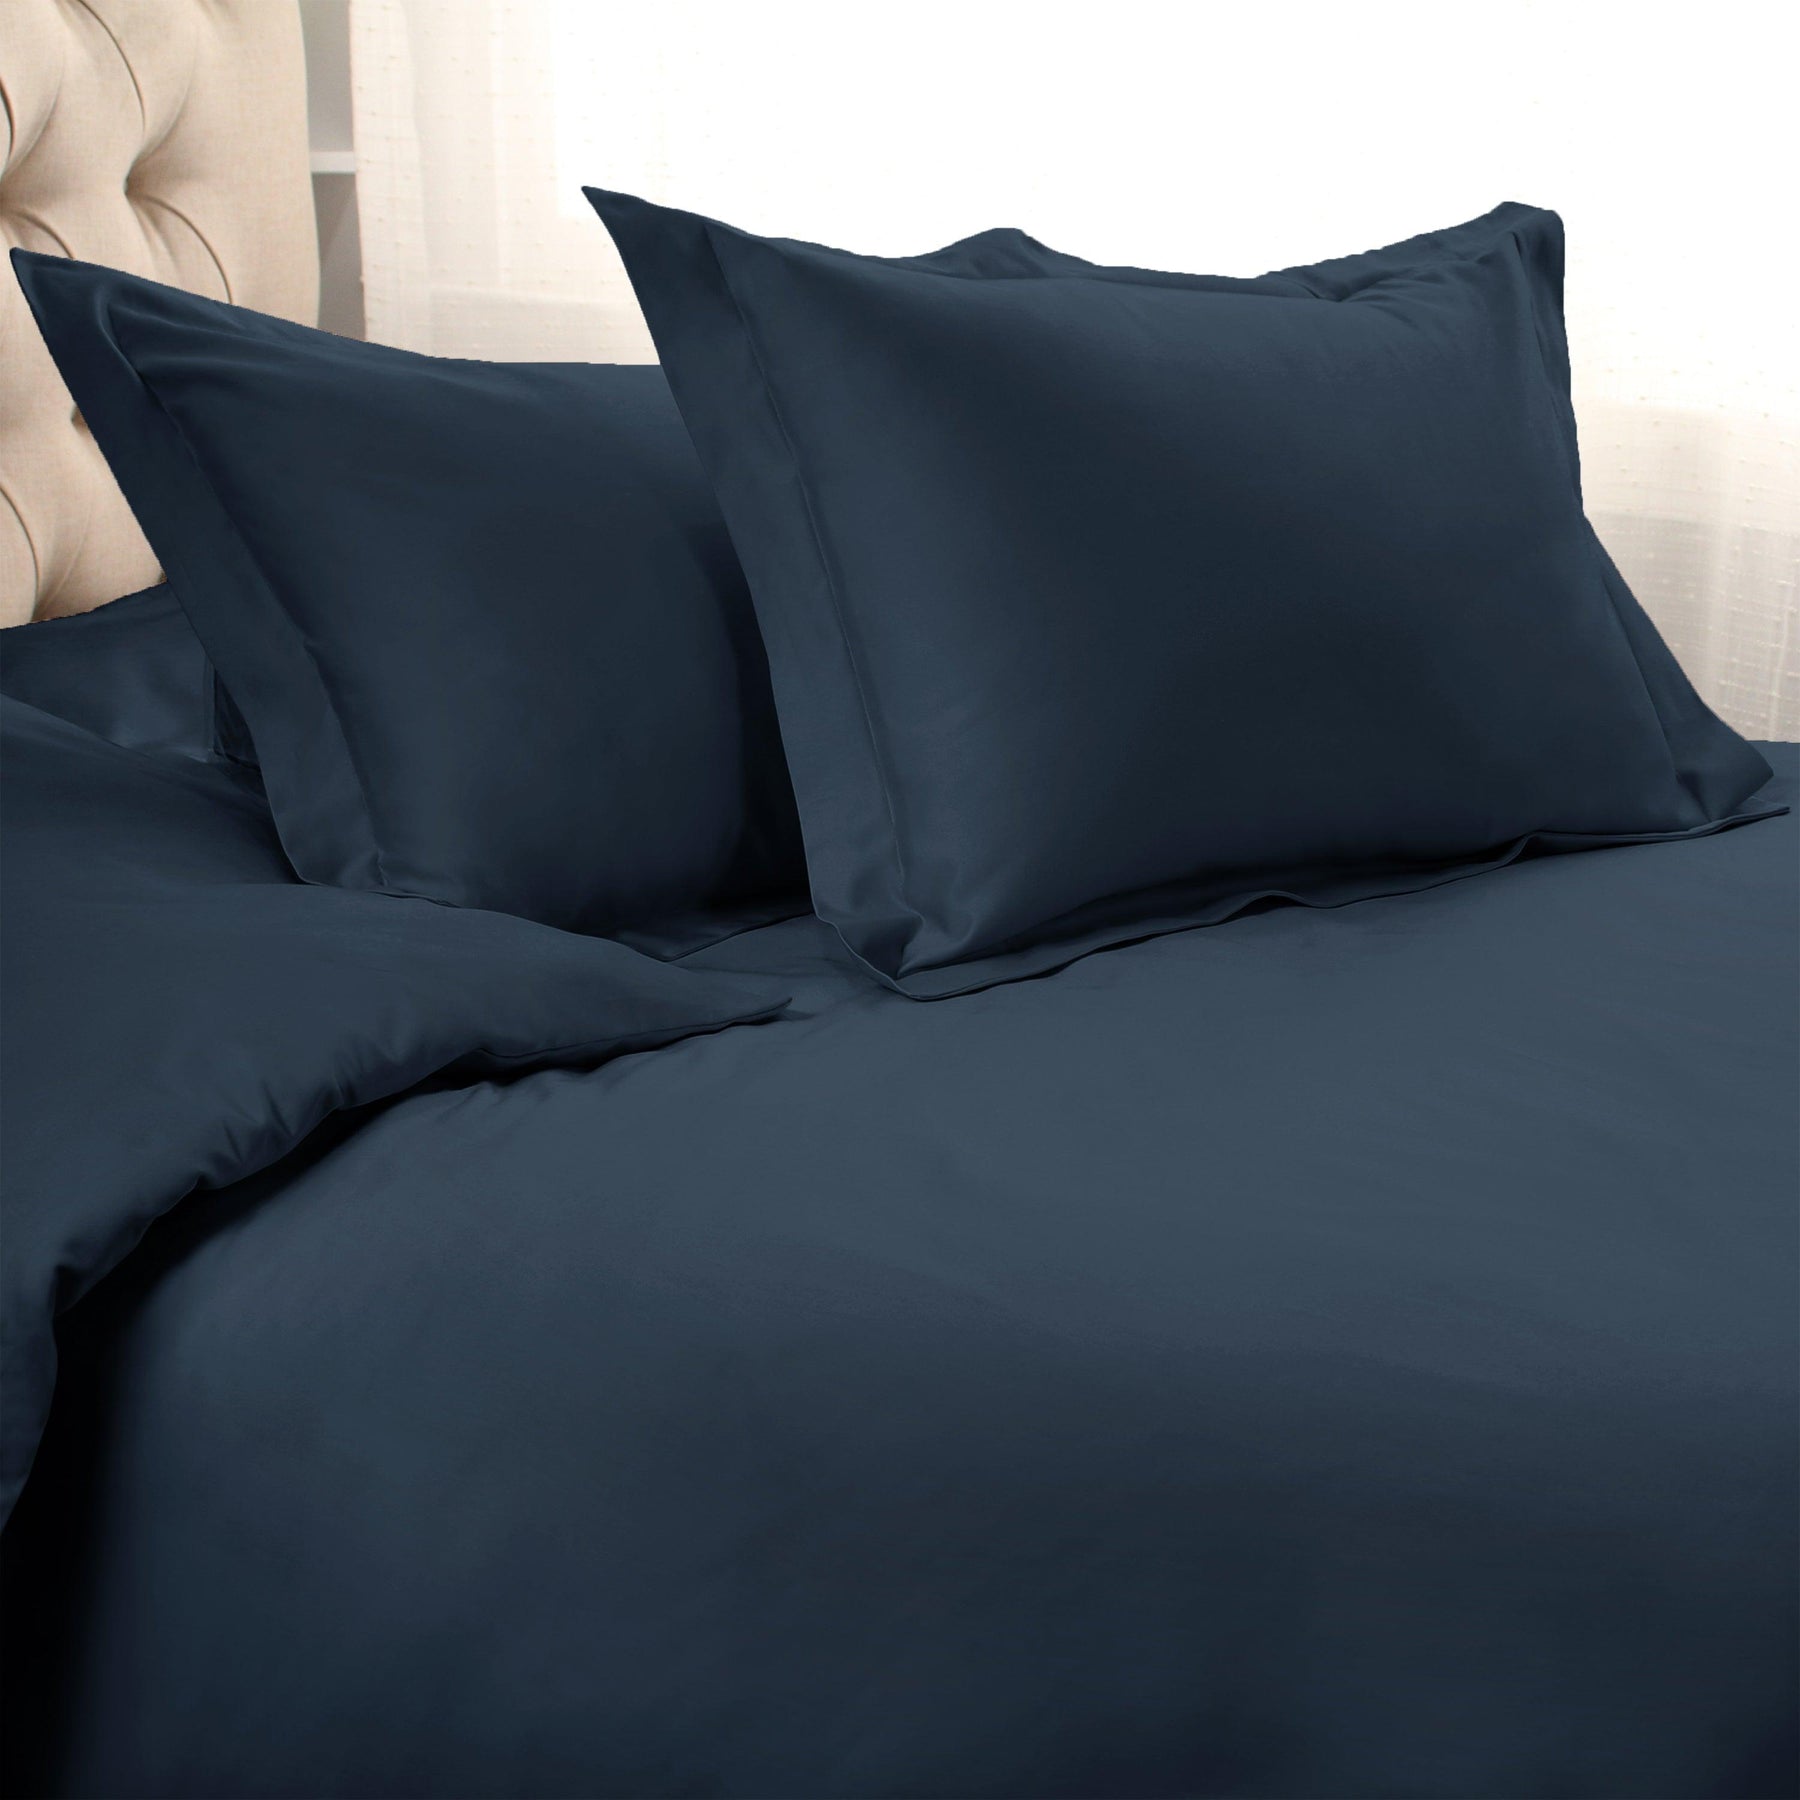  Superior Solid Egyptian Premium Cotton Duvet Cover Set -  Navy Blue'